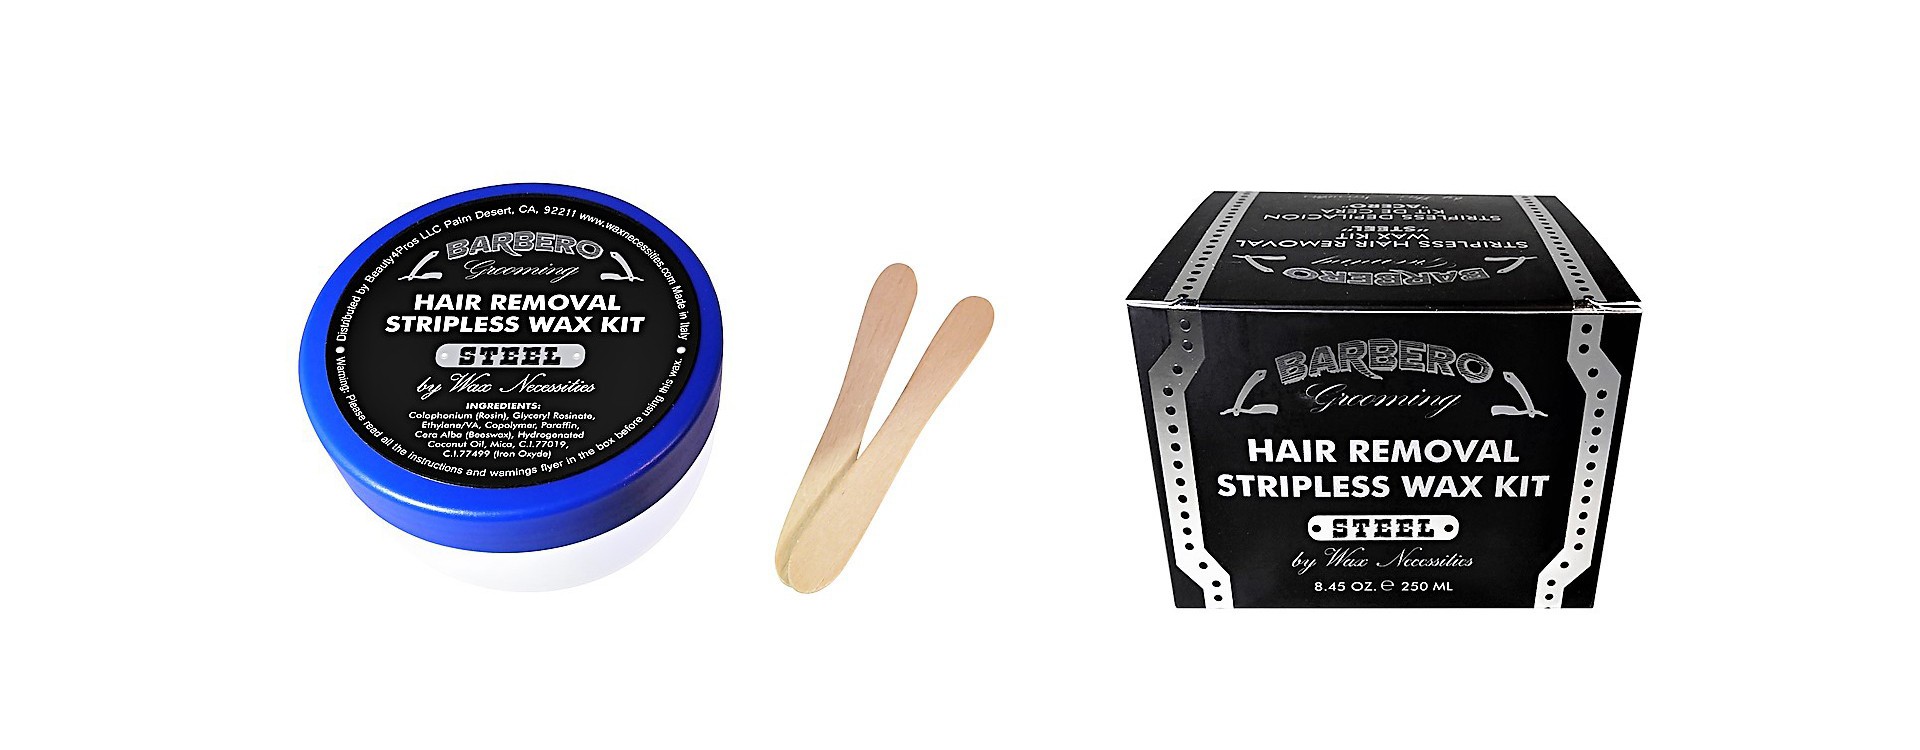 Barbero stripless waxing kit for men!